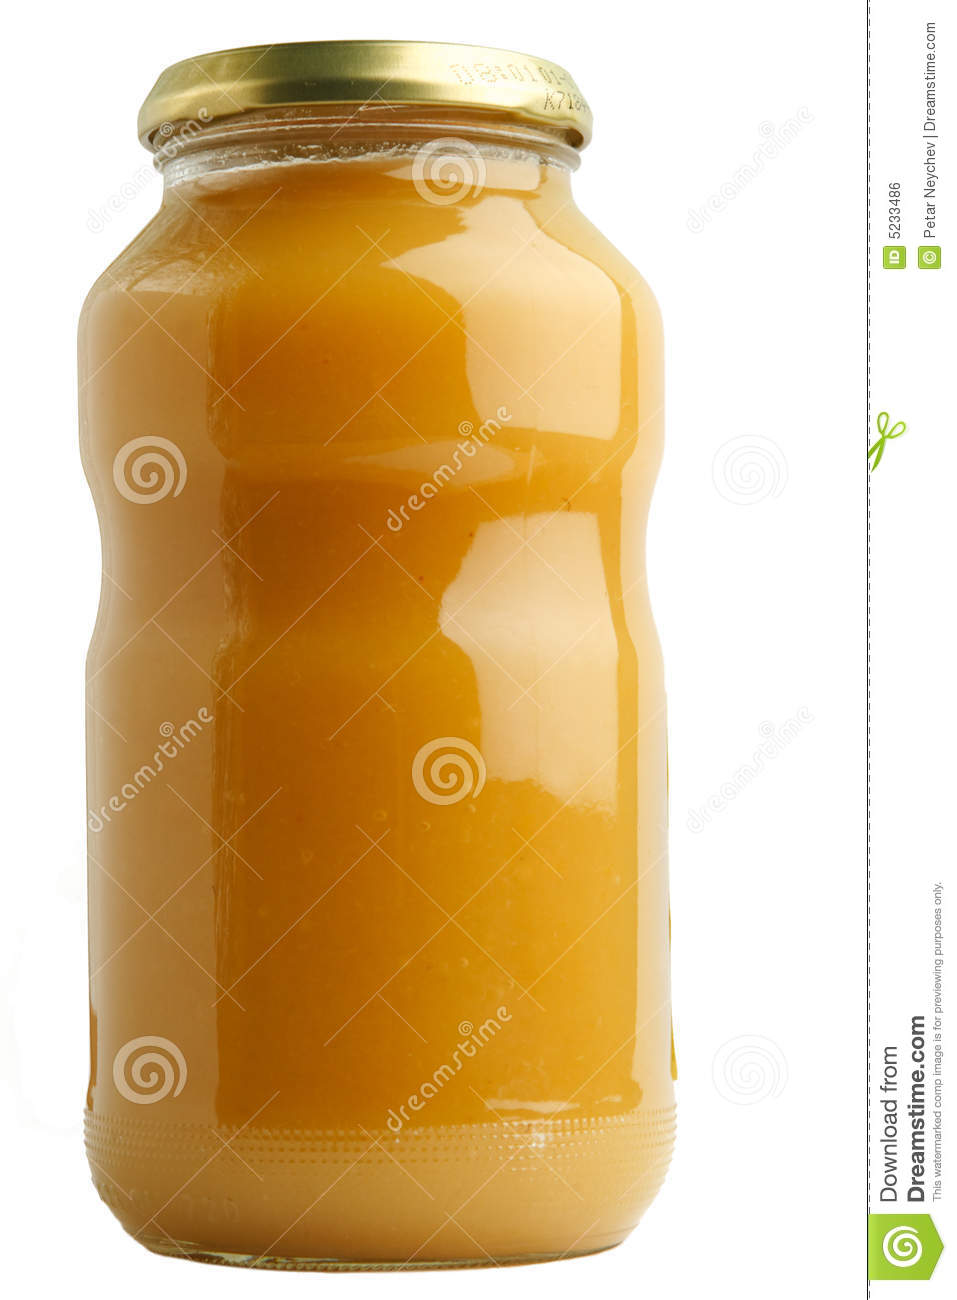 Apple Sauce Jar Royalty Free Stock Image   Image  5233486